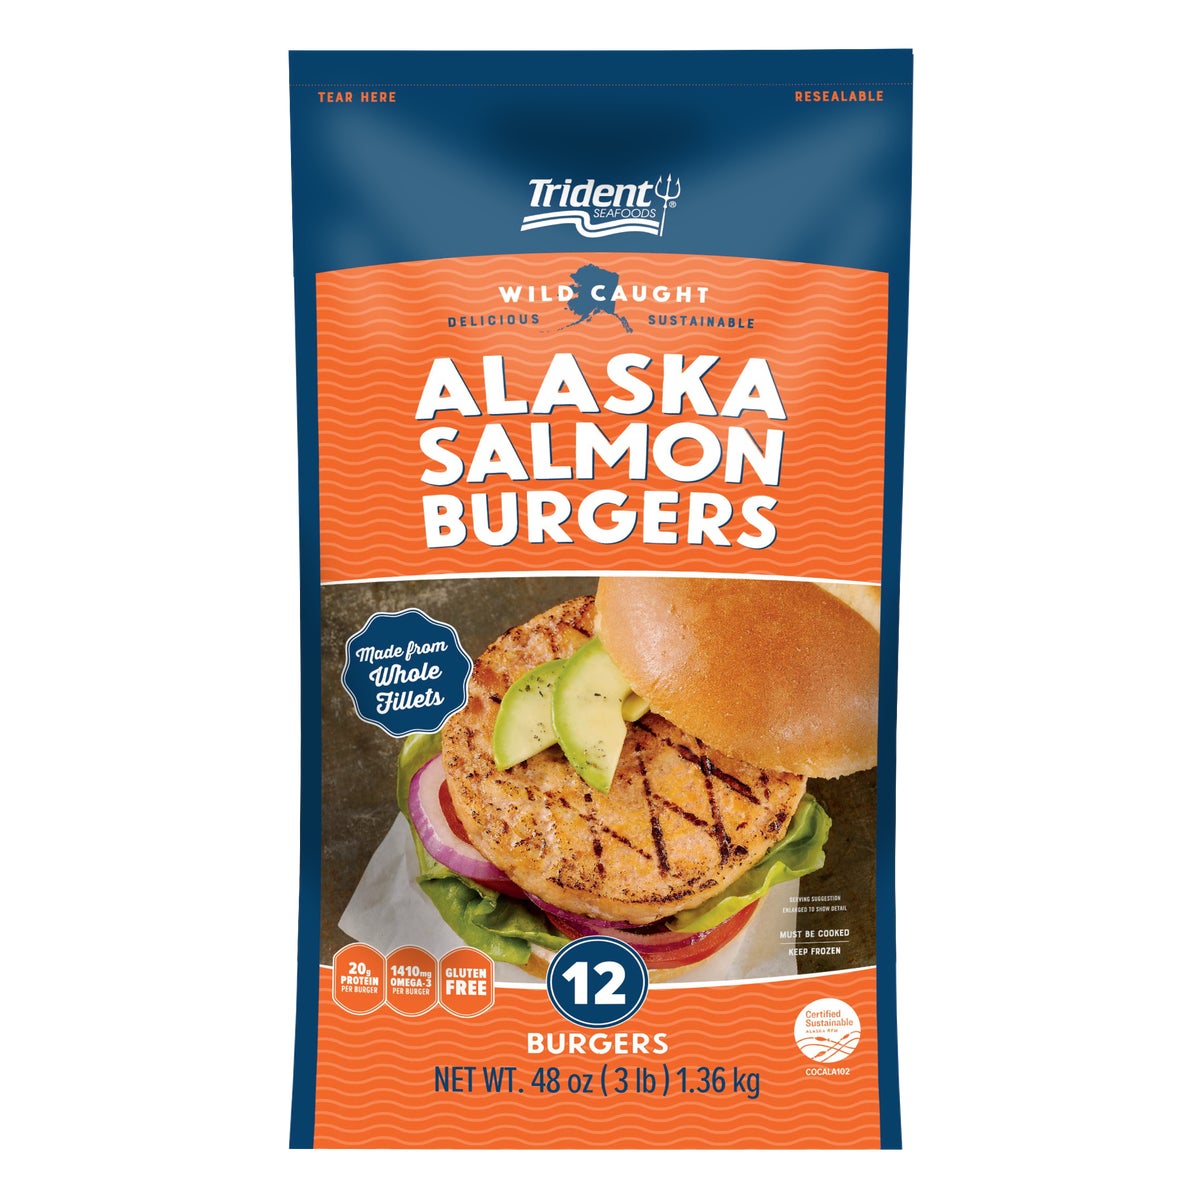 Alaska Salmon Burgers (12 count)